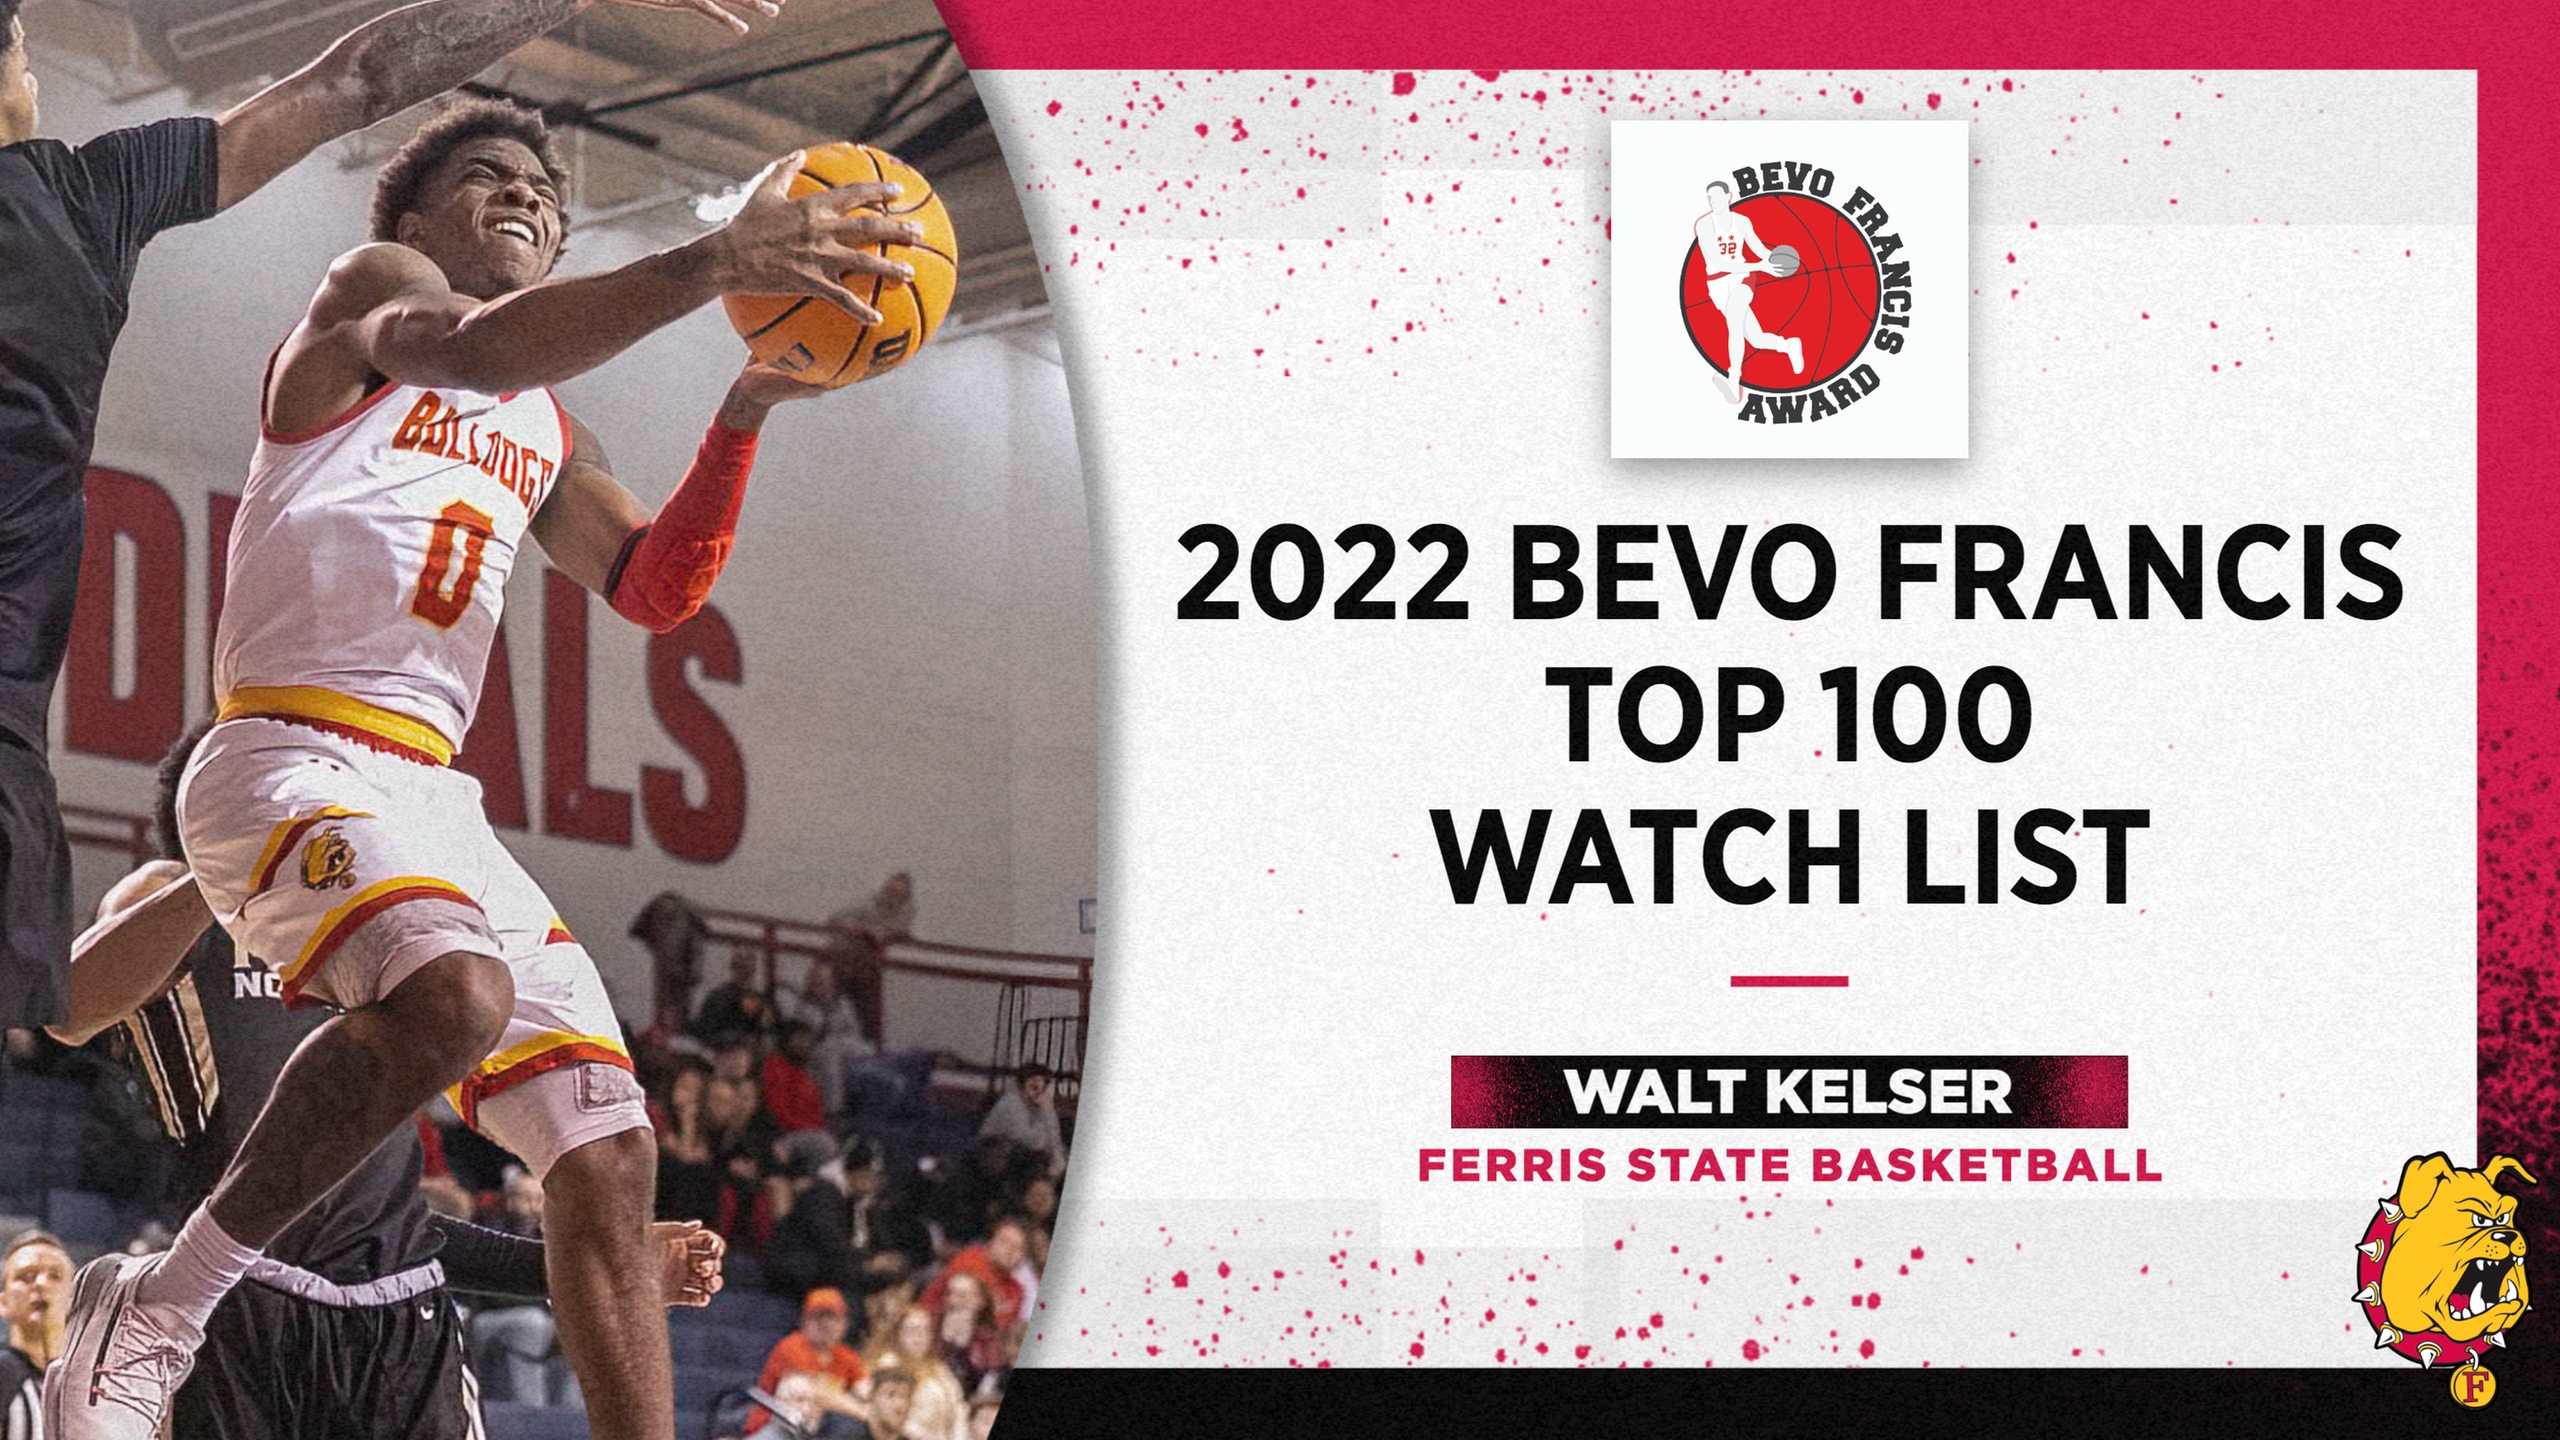 Ferris State's Walt Kelser Named To 2022 Bevo Francis Award Watch List